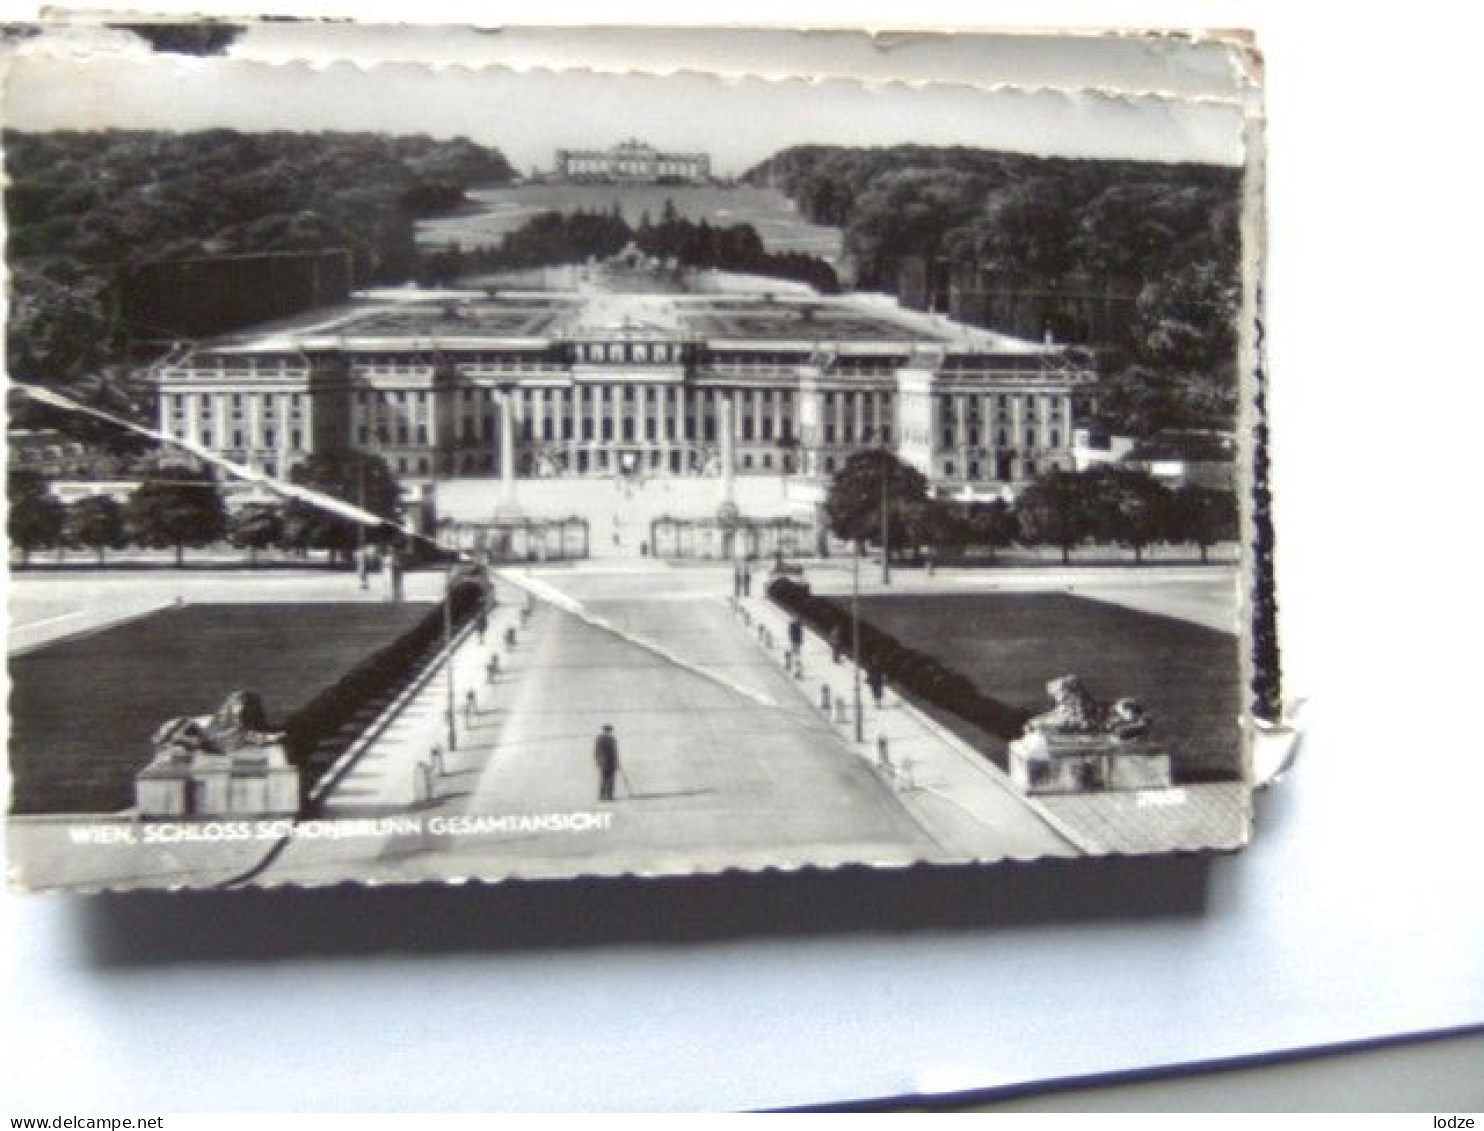 Oostenrijk Österreich Austria Schloss Wien - Schönbrunn Palace